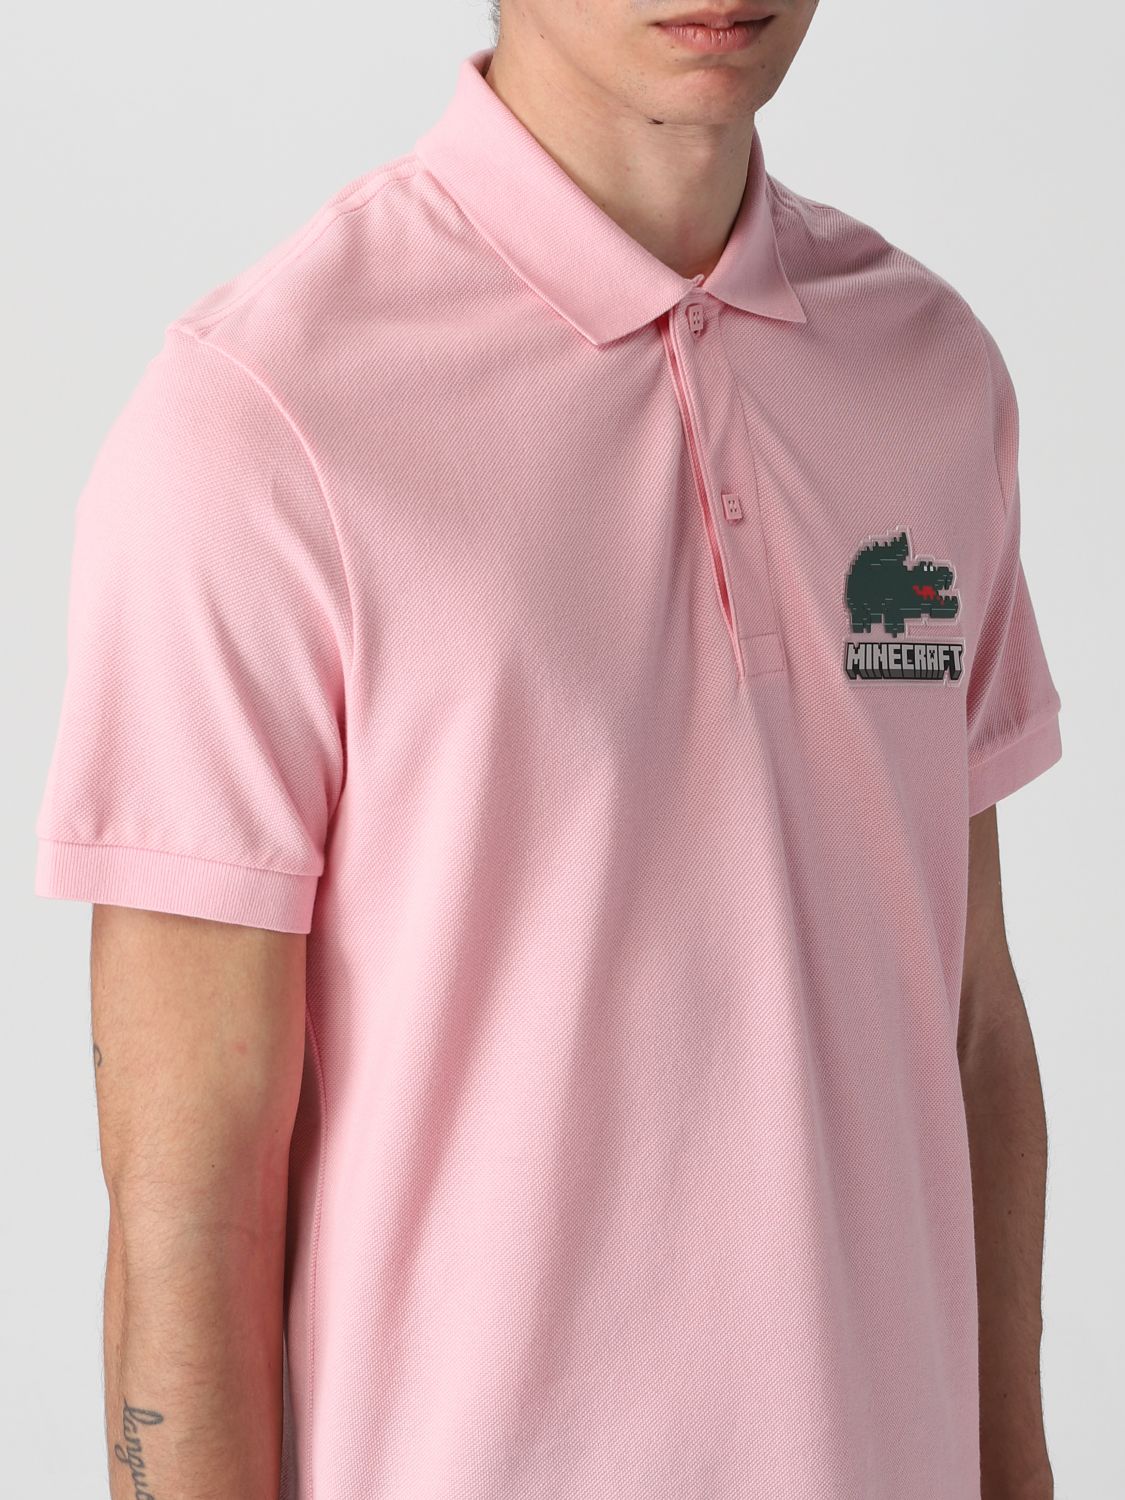 Lacoste X Minecraft Organic Cotton Polo T Shirt Pink Polo Shirt